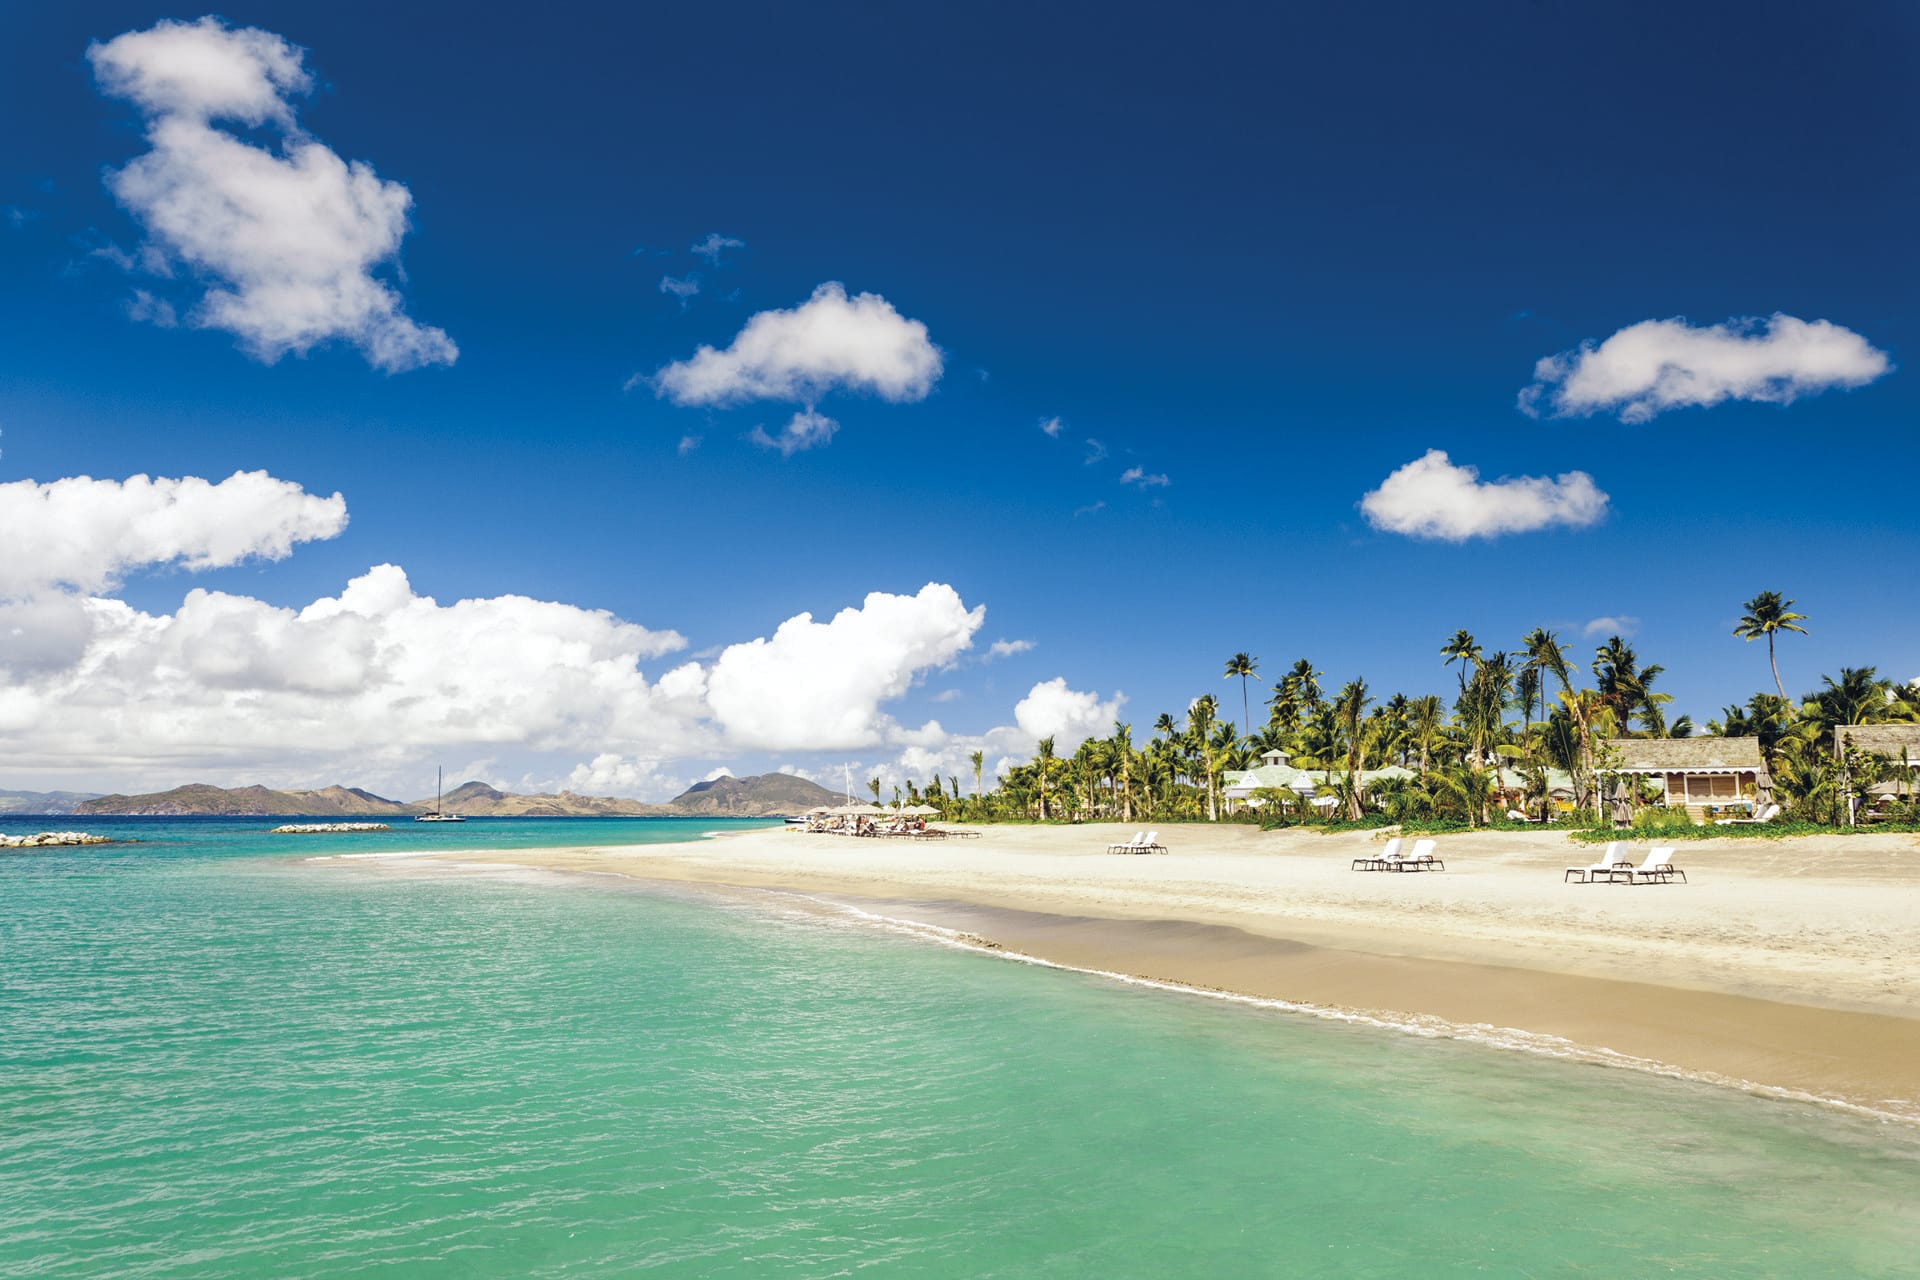 Things to Do in Nevis Based on Alexander Hamilton: Four Seasons Resort Nevis